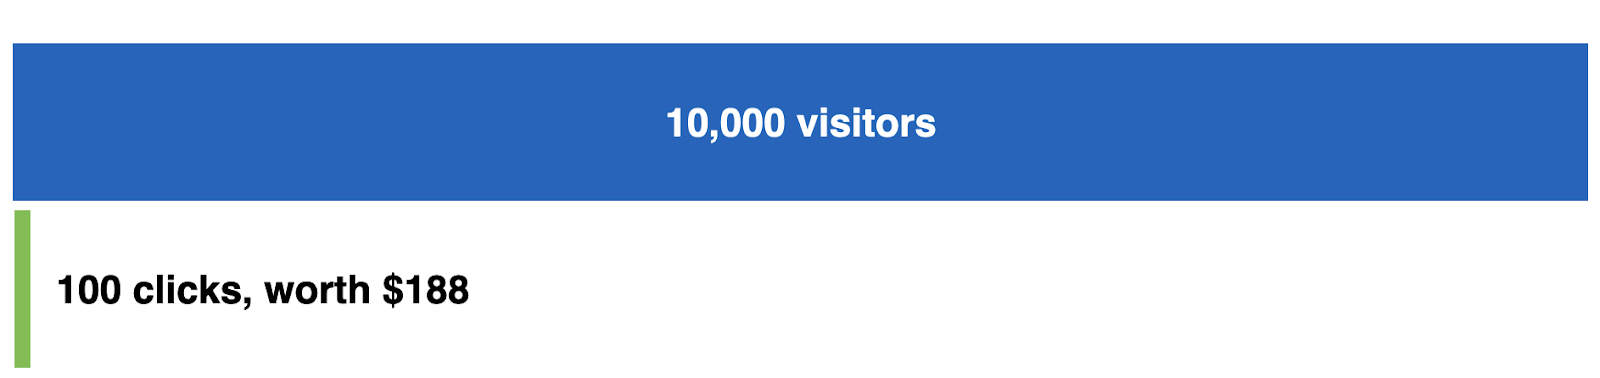 10,000 visitors - 100 clicks, worth $188